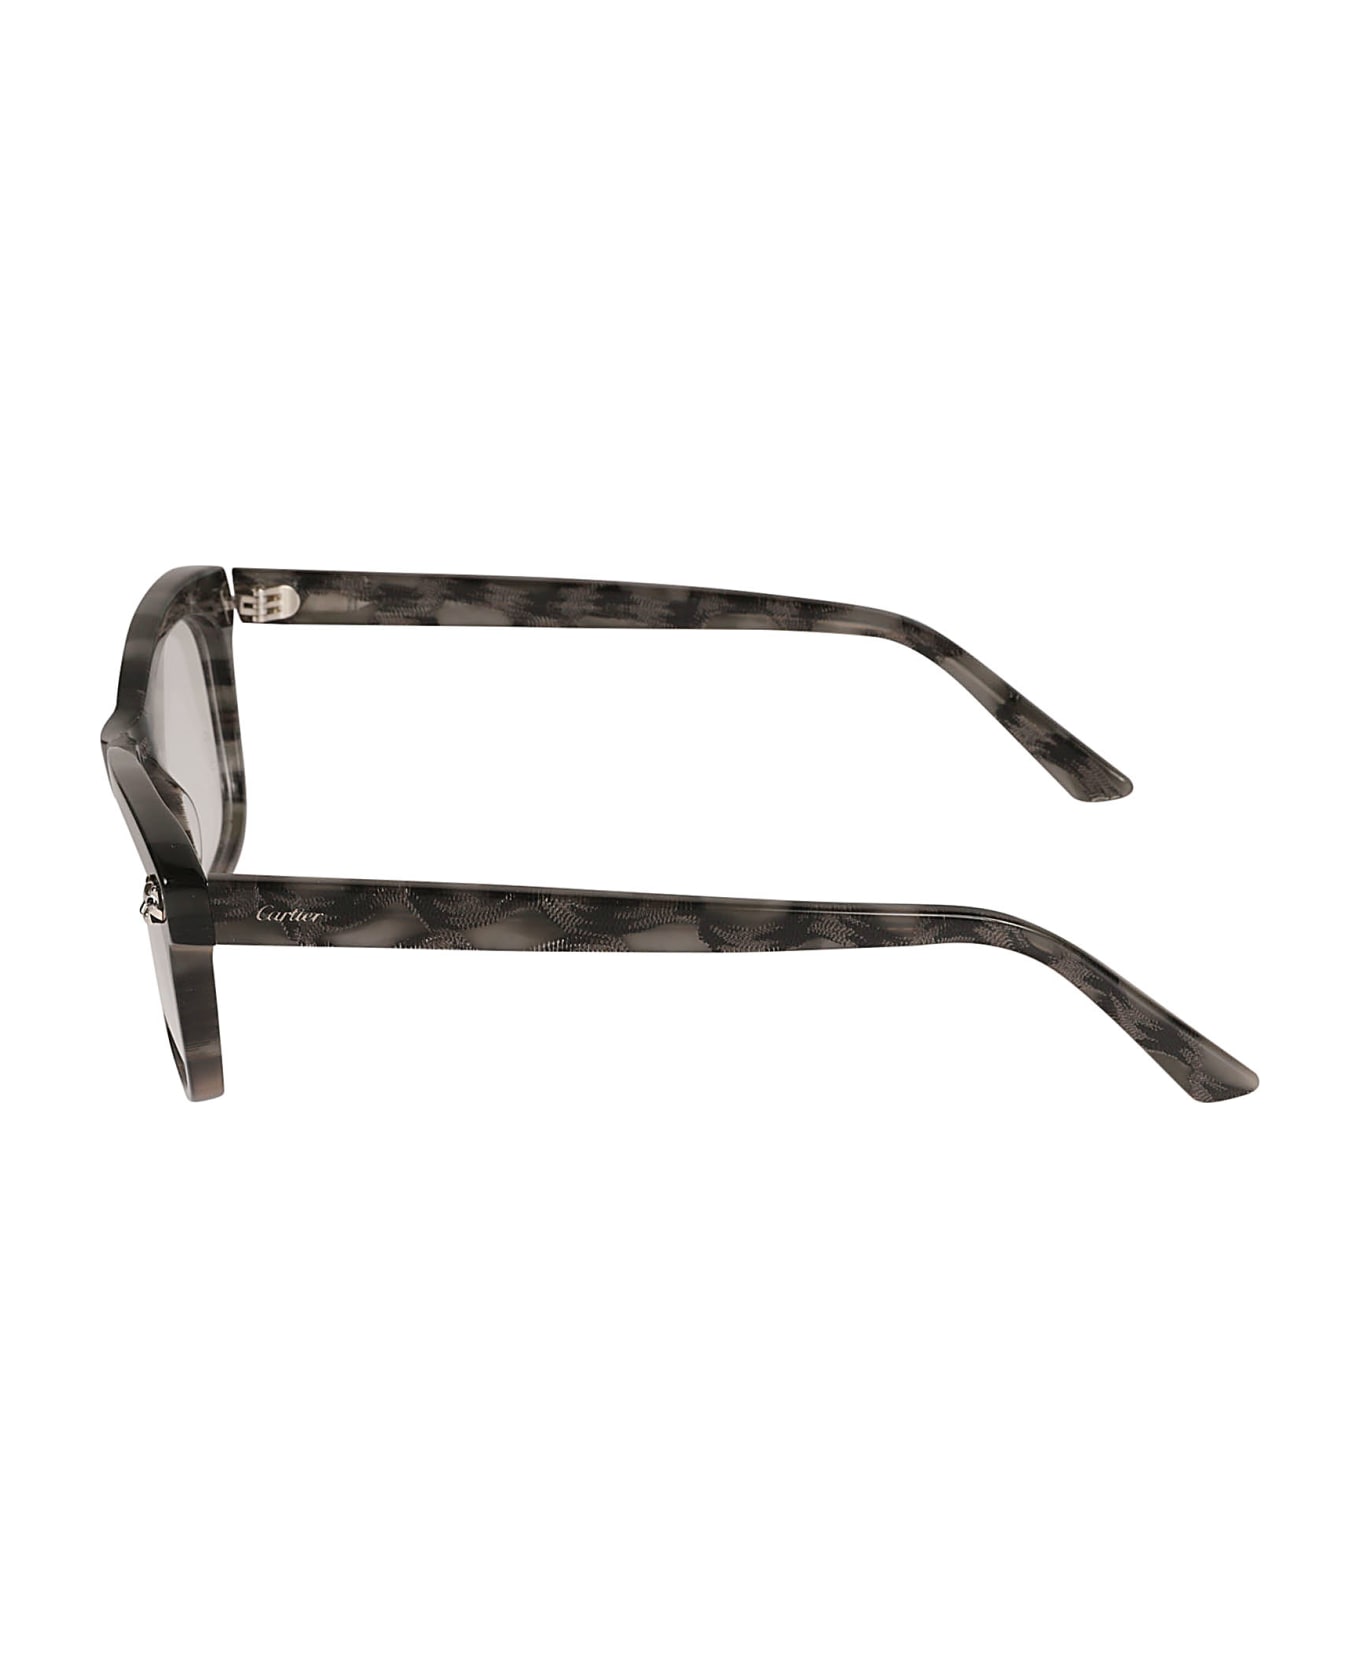 Cartier Eyewear Demo Rectangular Glasses - 008 havana havana transpa サングラス